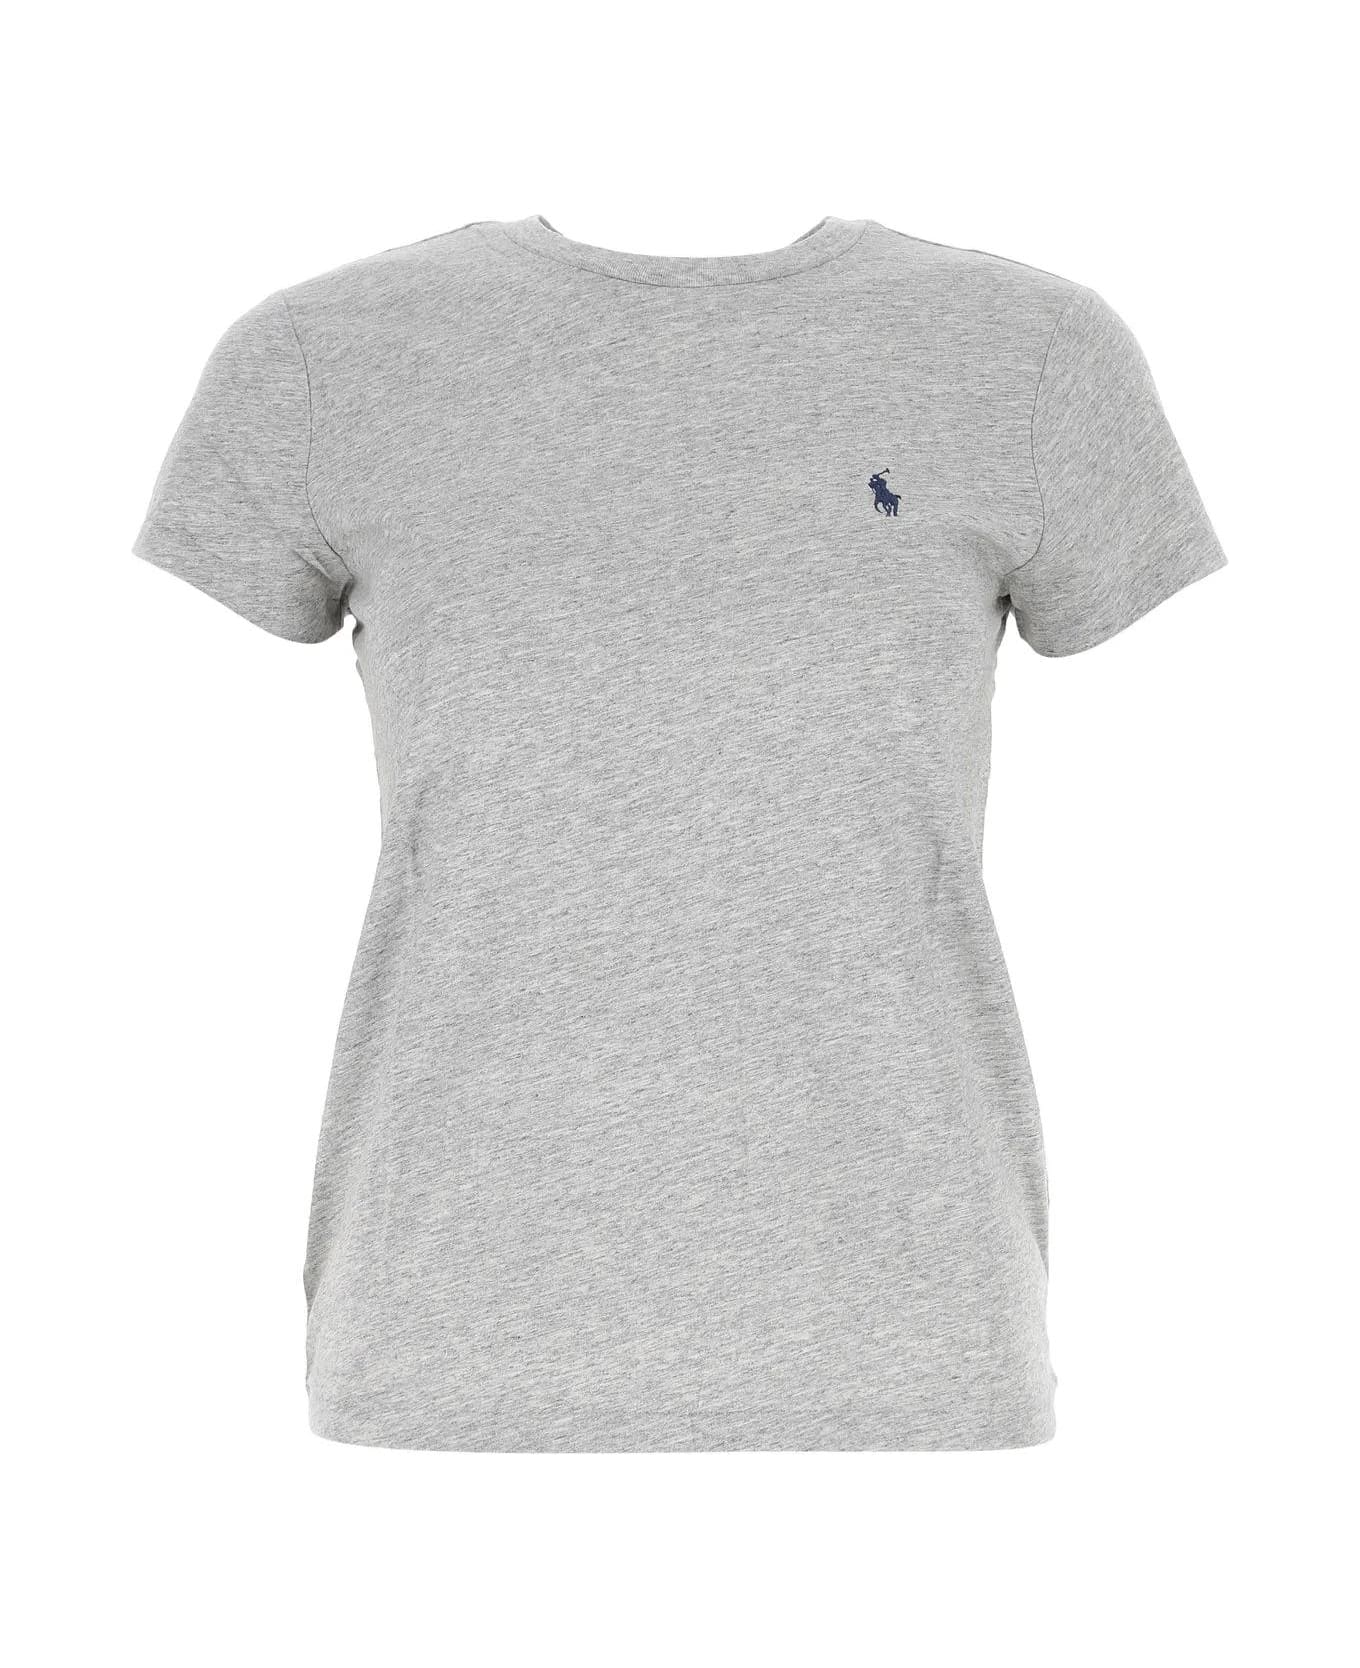 Ralph Lauren Melange Grey Cotton T-shirt - Cobblestone Heather